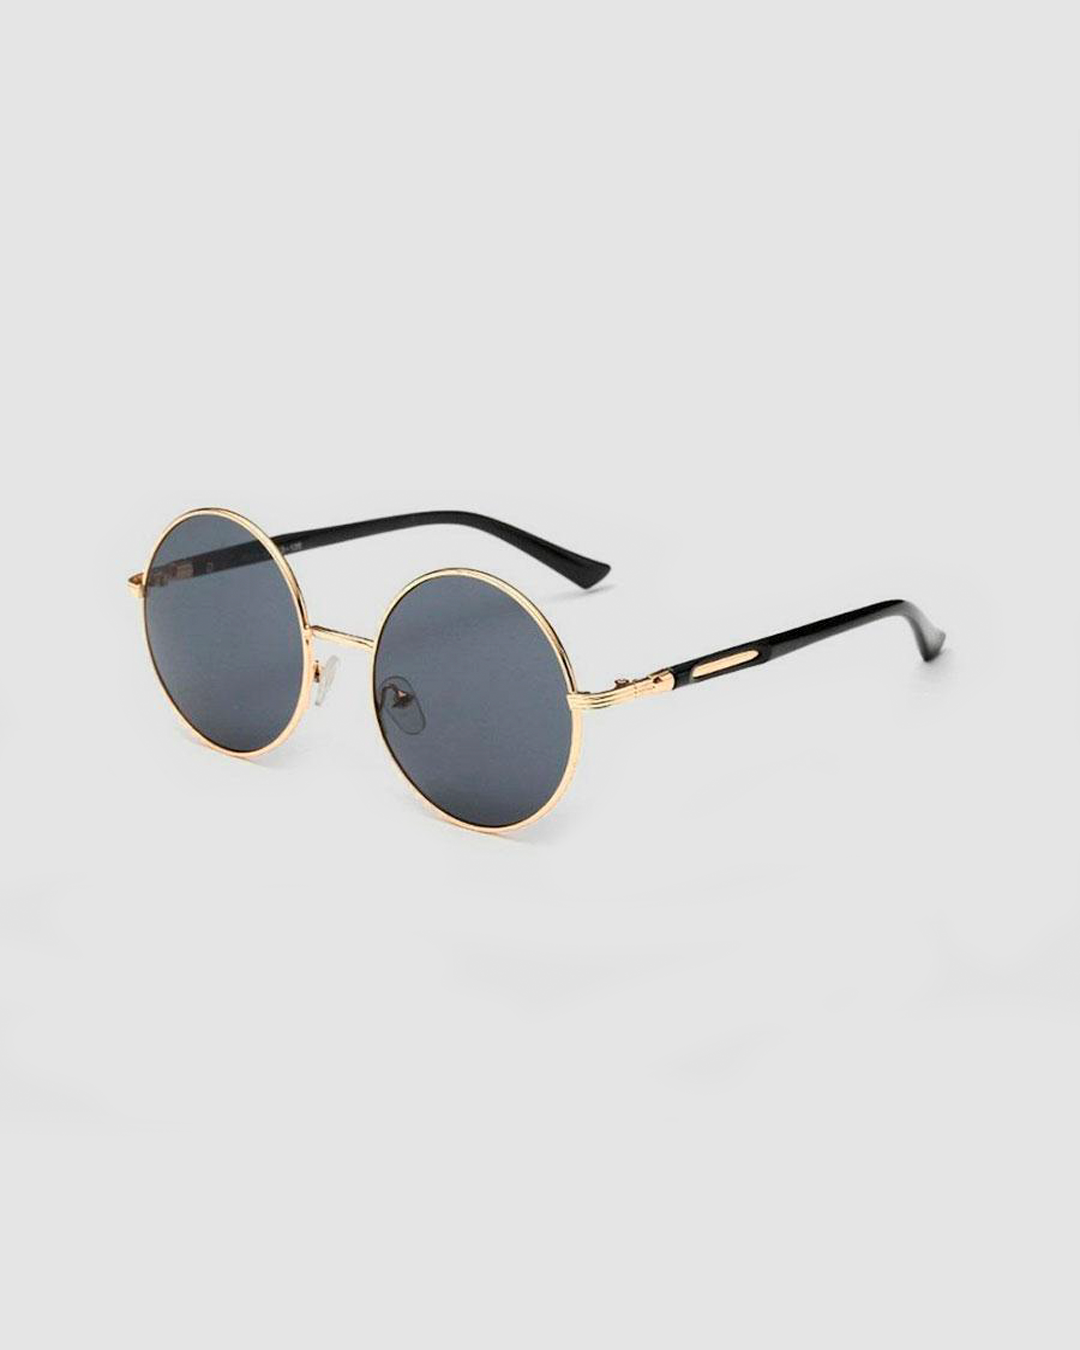 Dubois Sunglasses